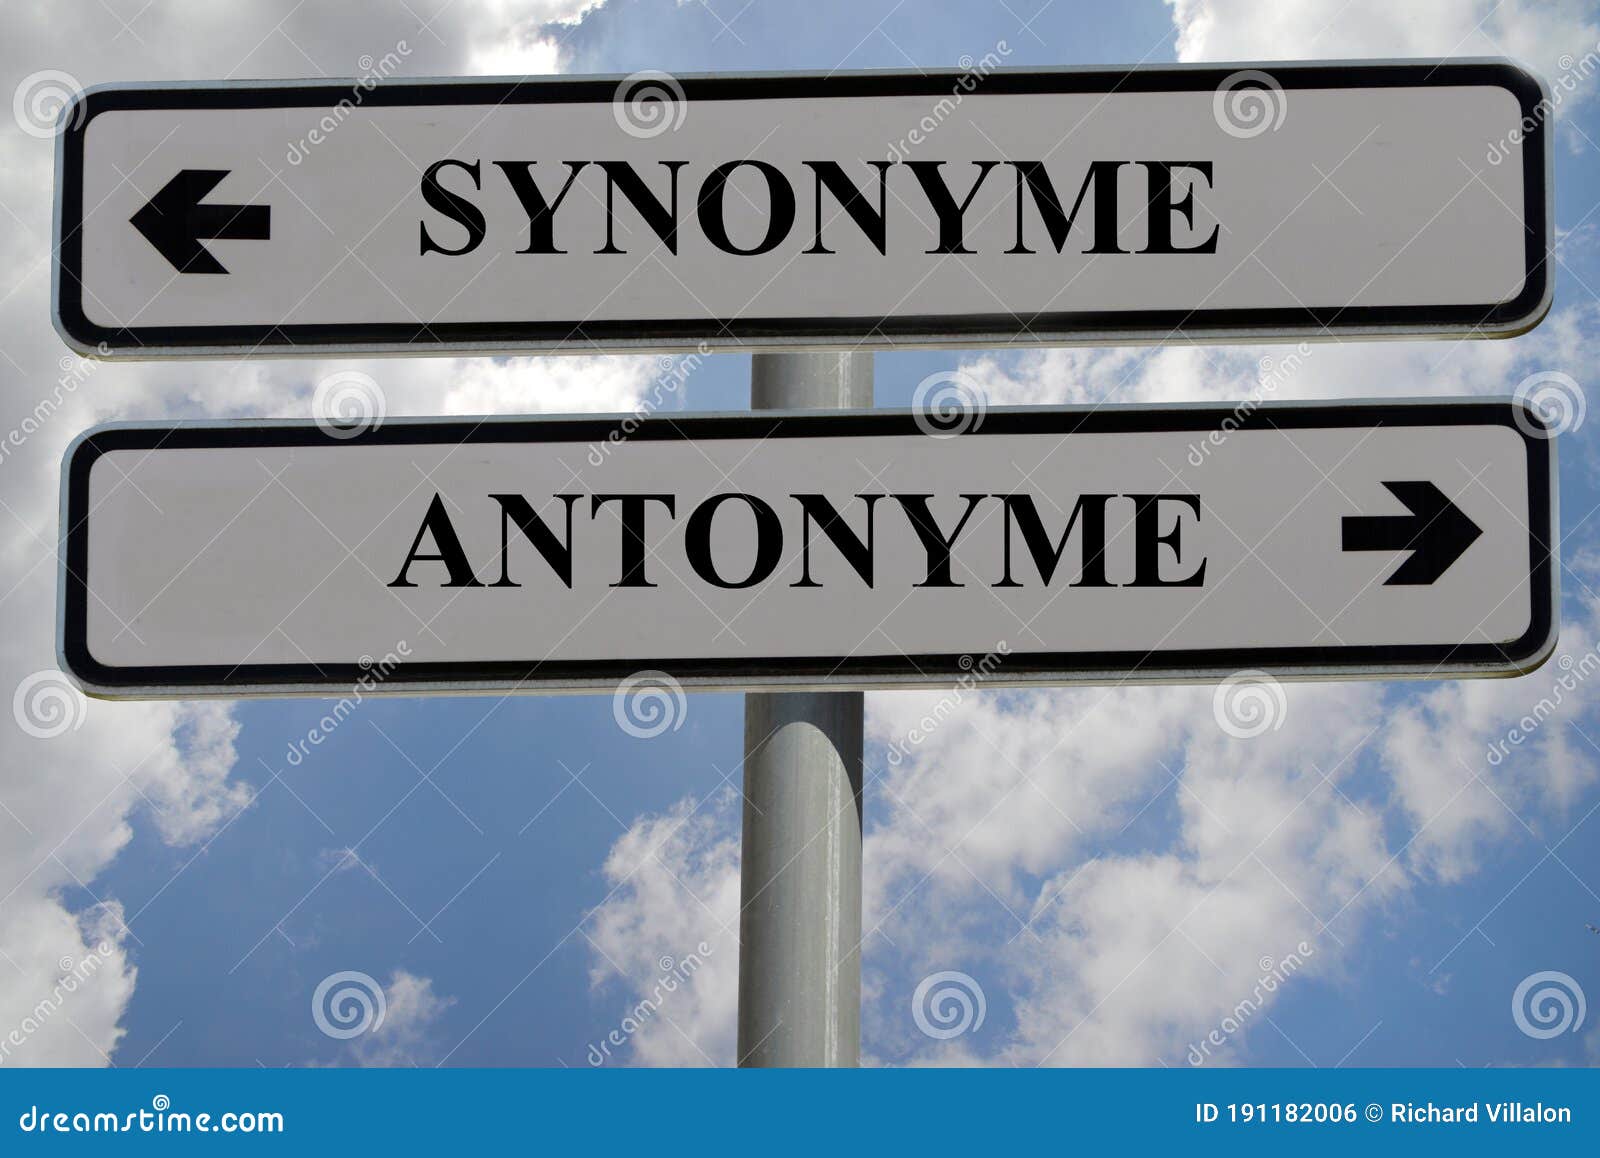 indicating synonym